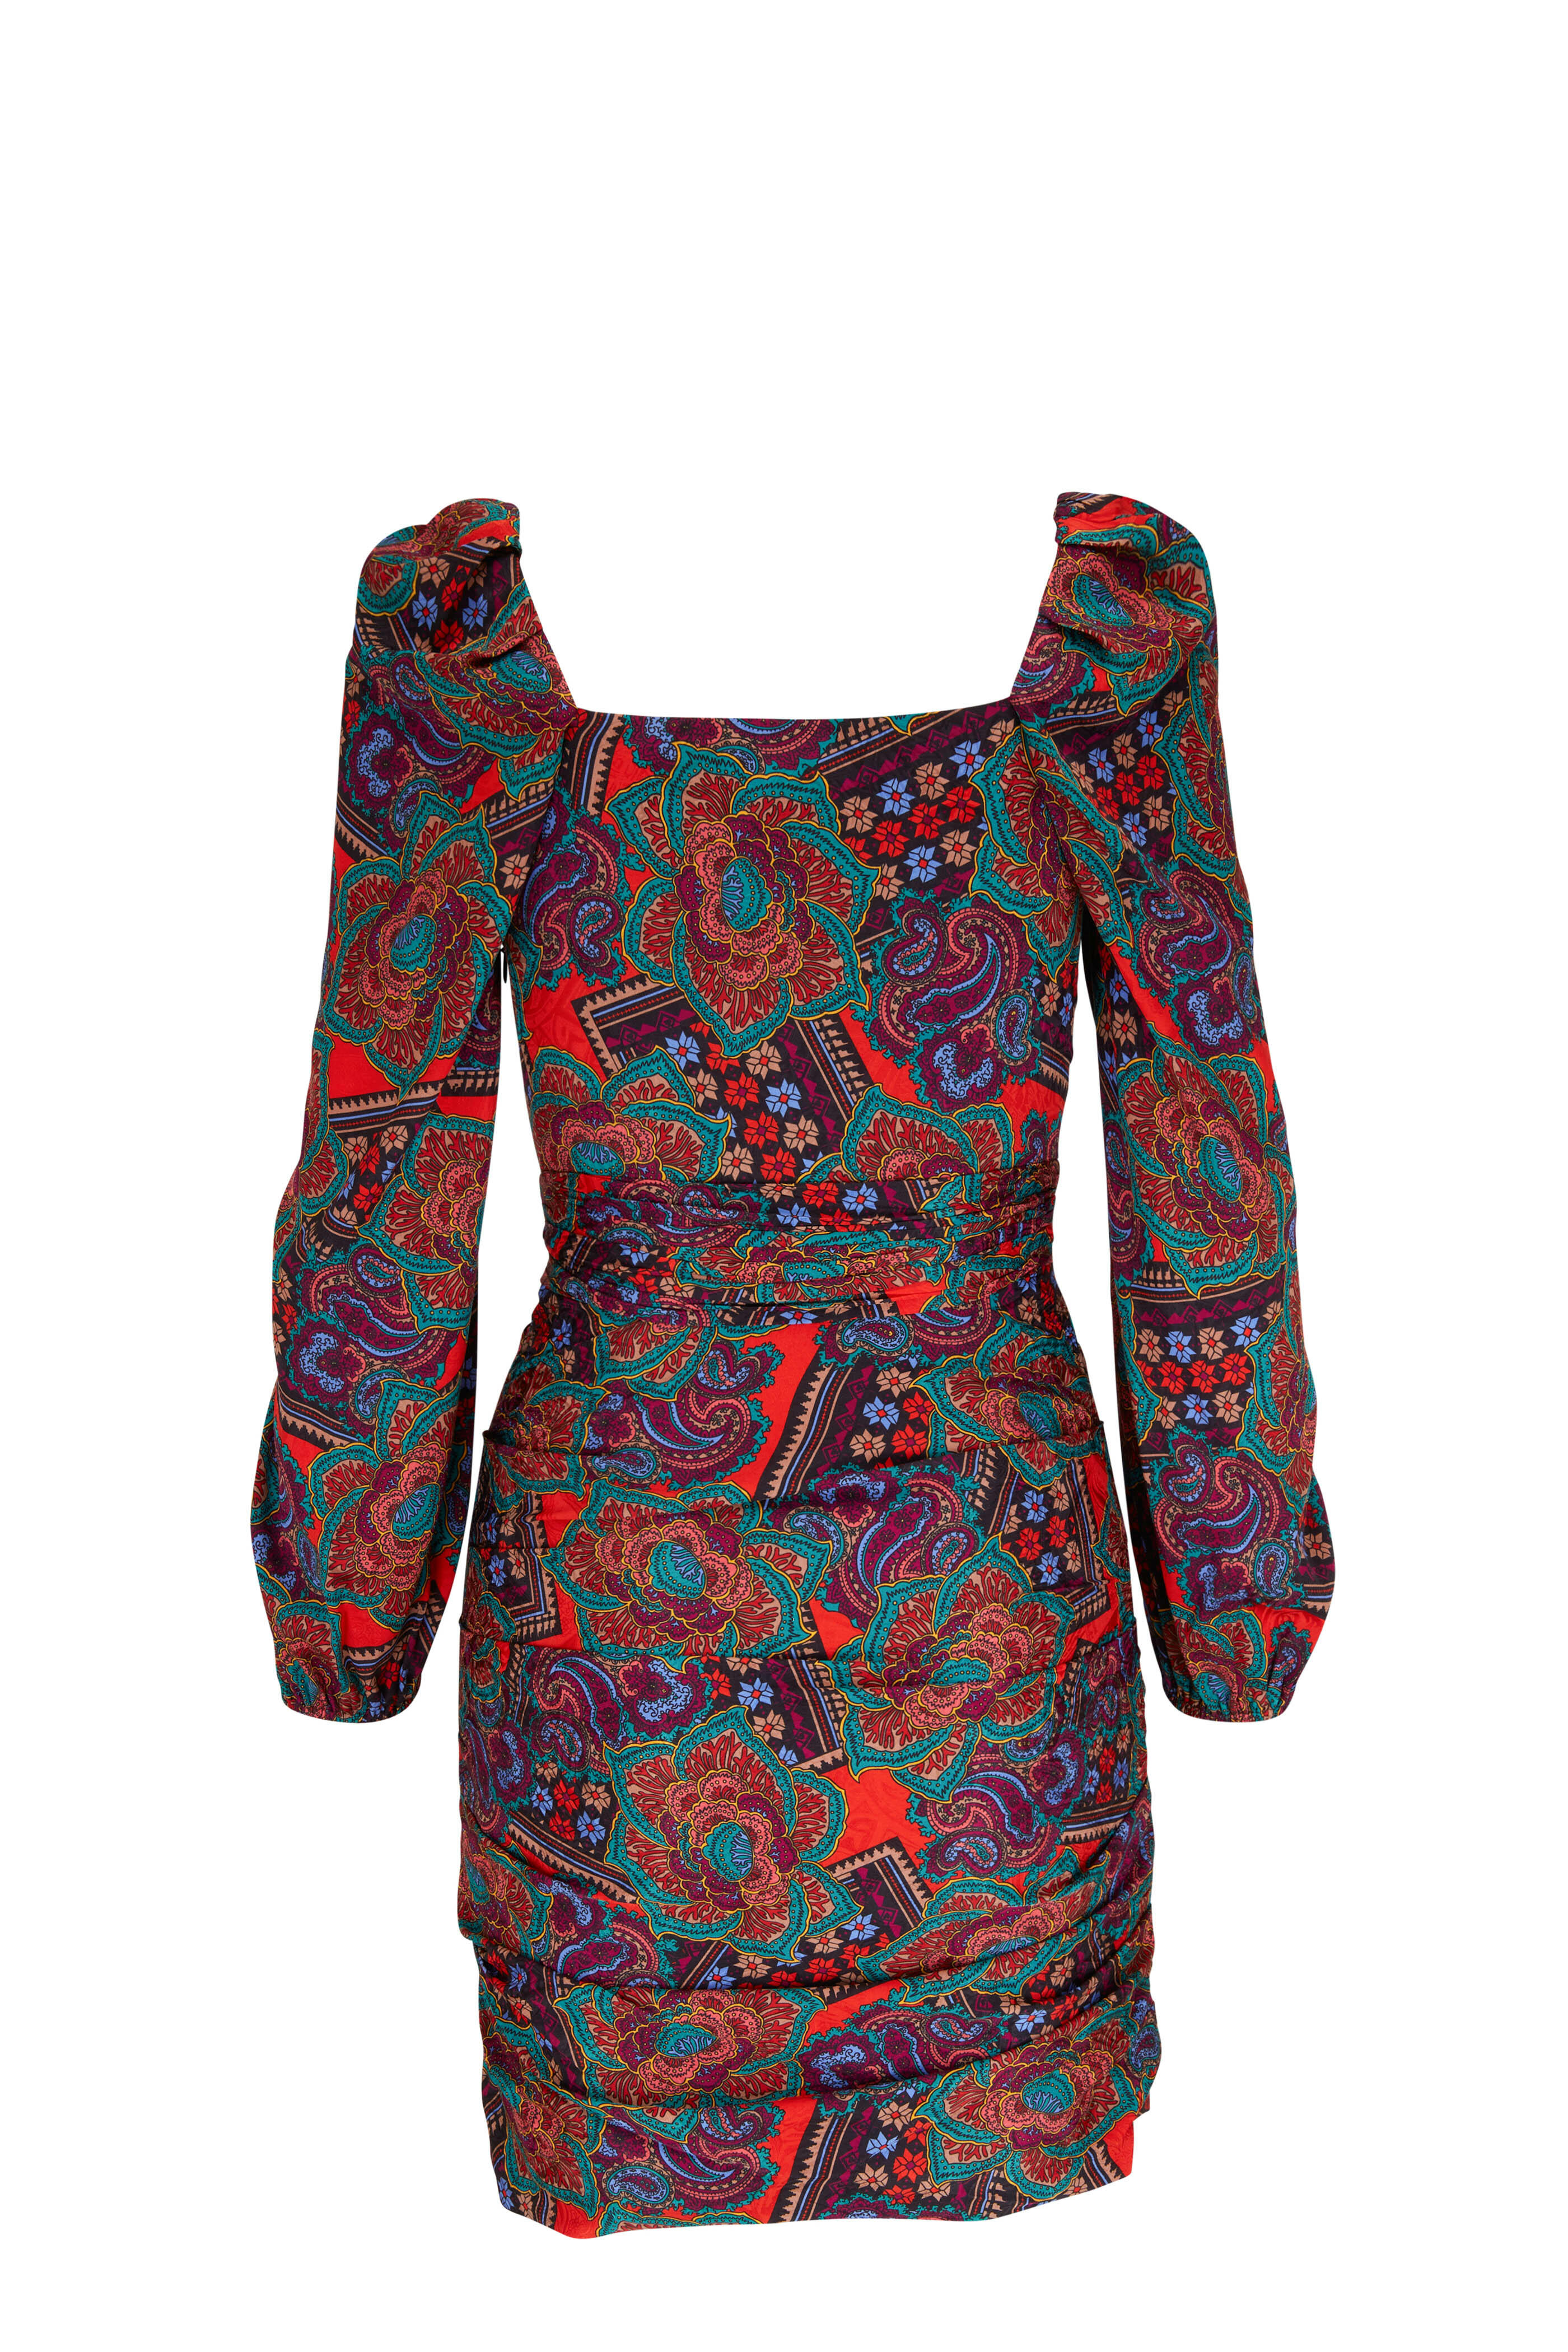 Veronica Beard - Bellino Flame Red Multi Print Dress